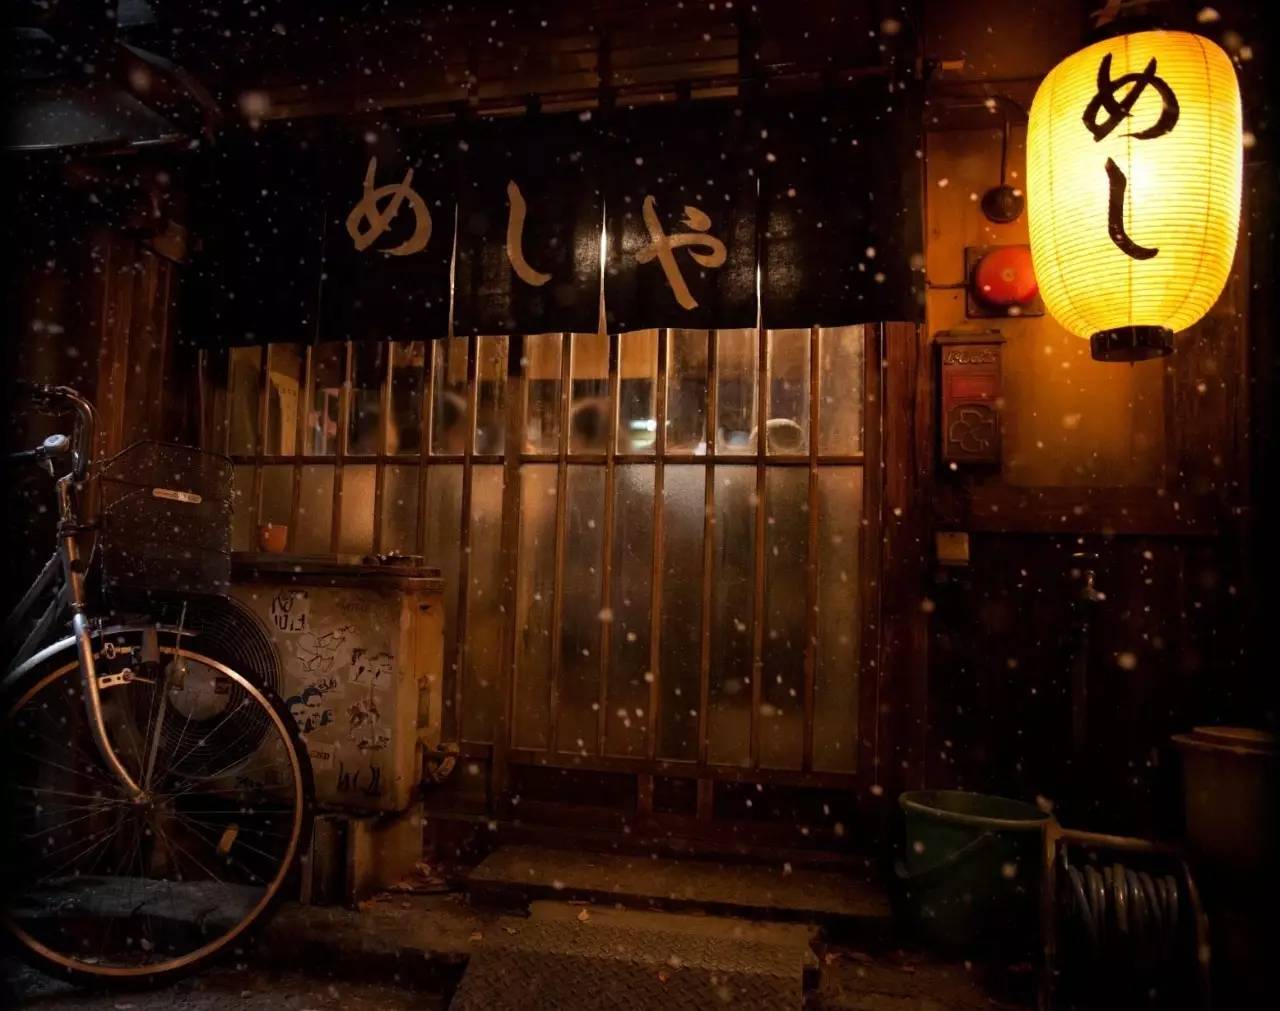 Amazon.co.jp: 深夜食堂 2を観る | Prime Video